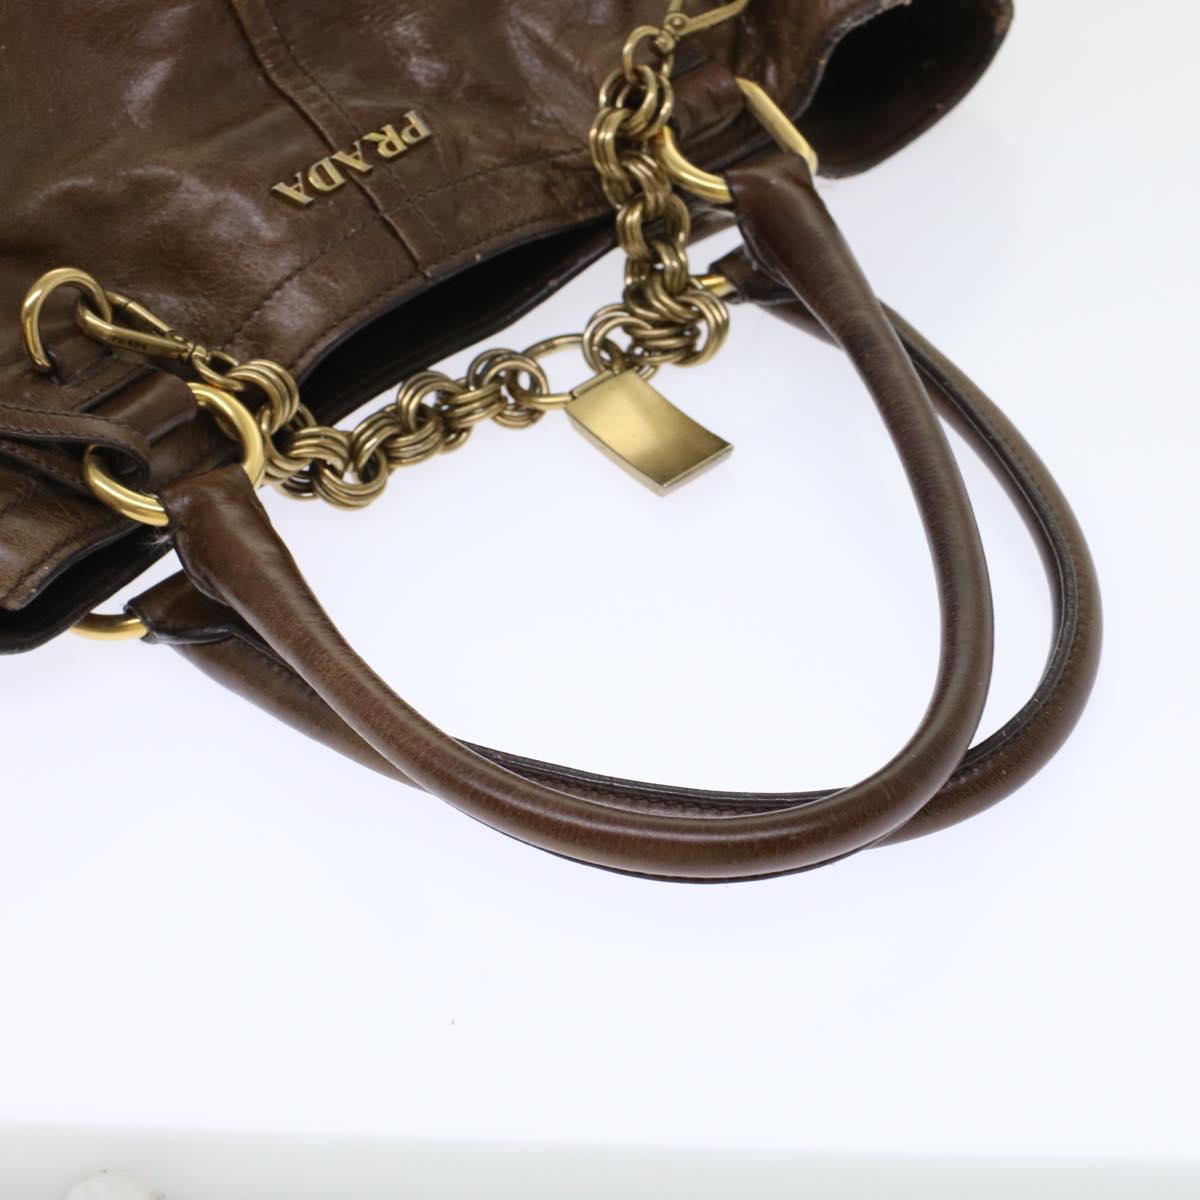 PRADA Hand Bag Leather 2way Brown Auth 45865